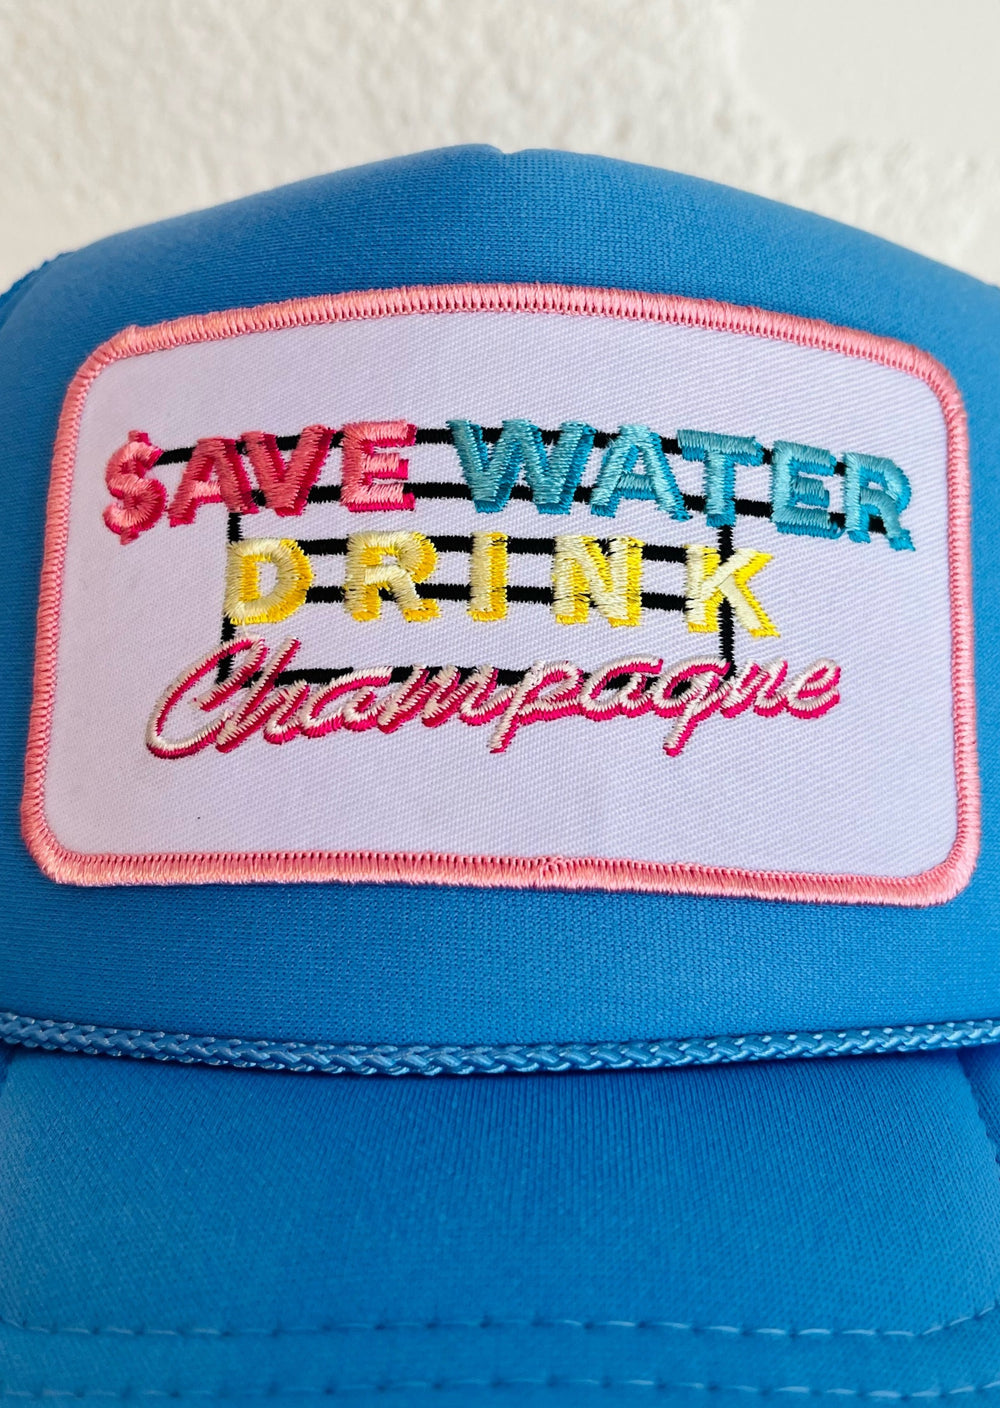 Save Water Drink Champagne Trucker Hat, Hat, Adeline, Adeline, dallas boutique, dallas texas, texas boutique, women's boutique dallas, adeline boutique, dallas boutique, trendy boutique, affordable boutique